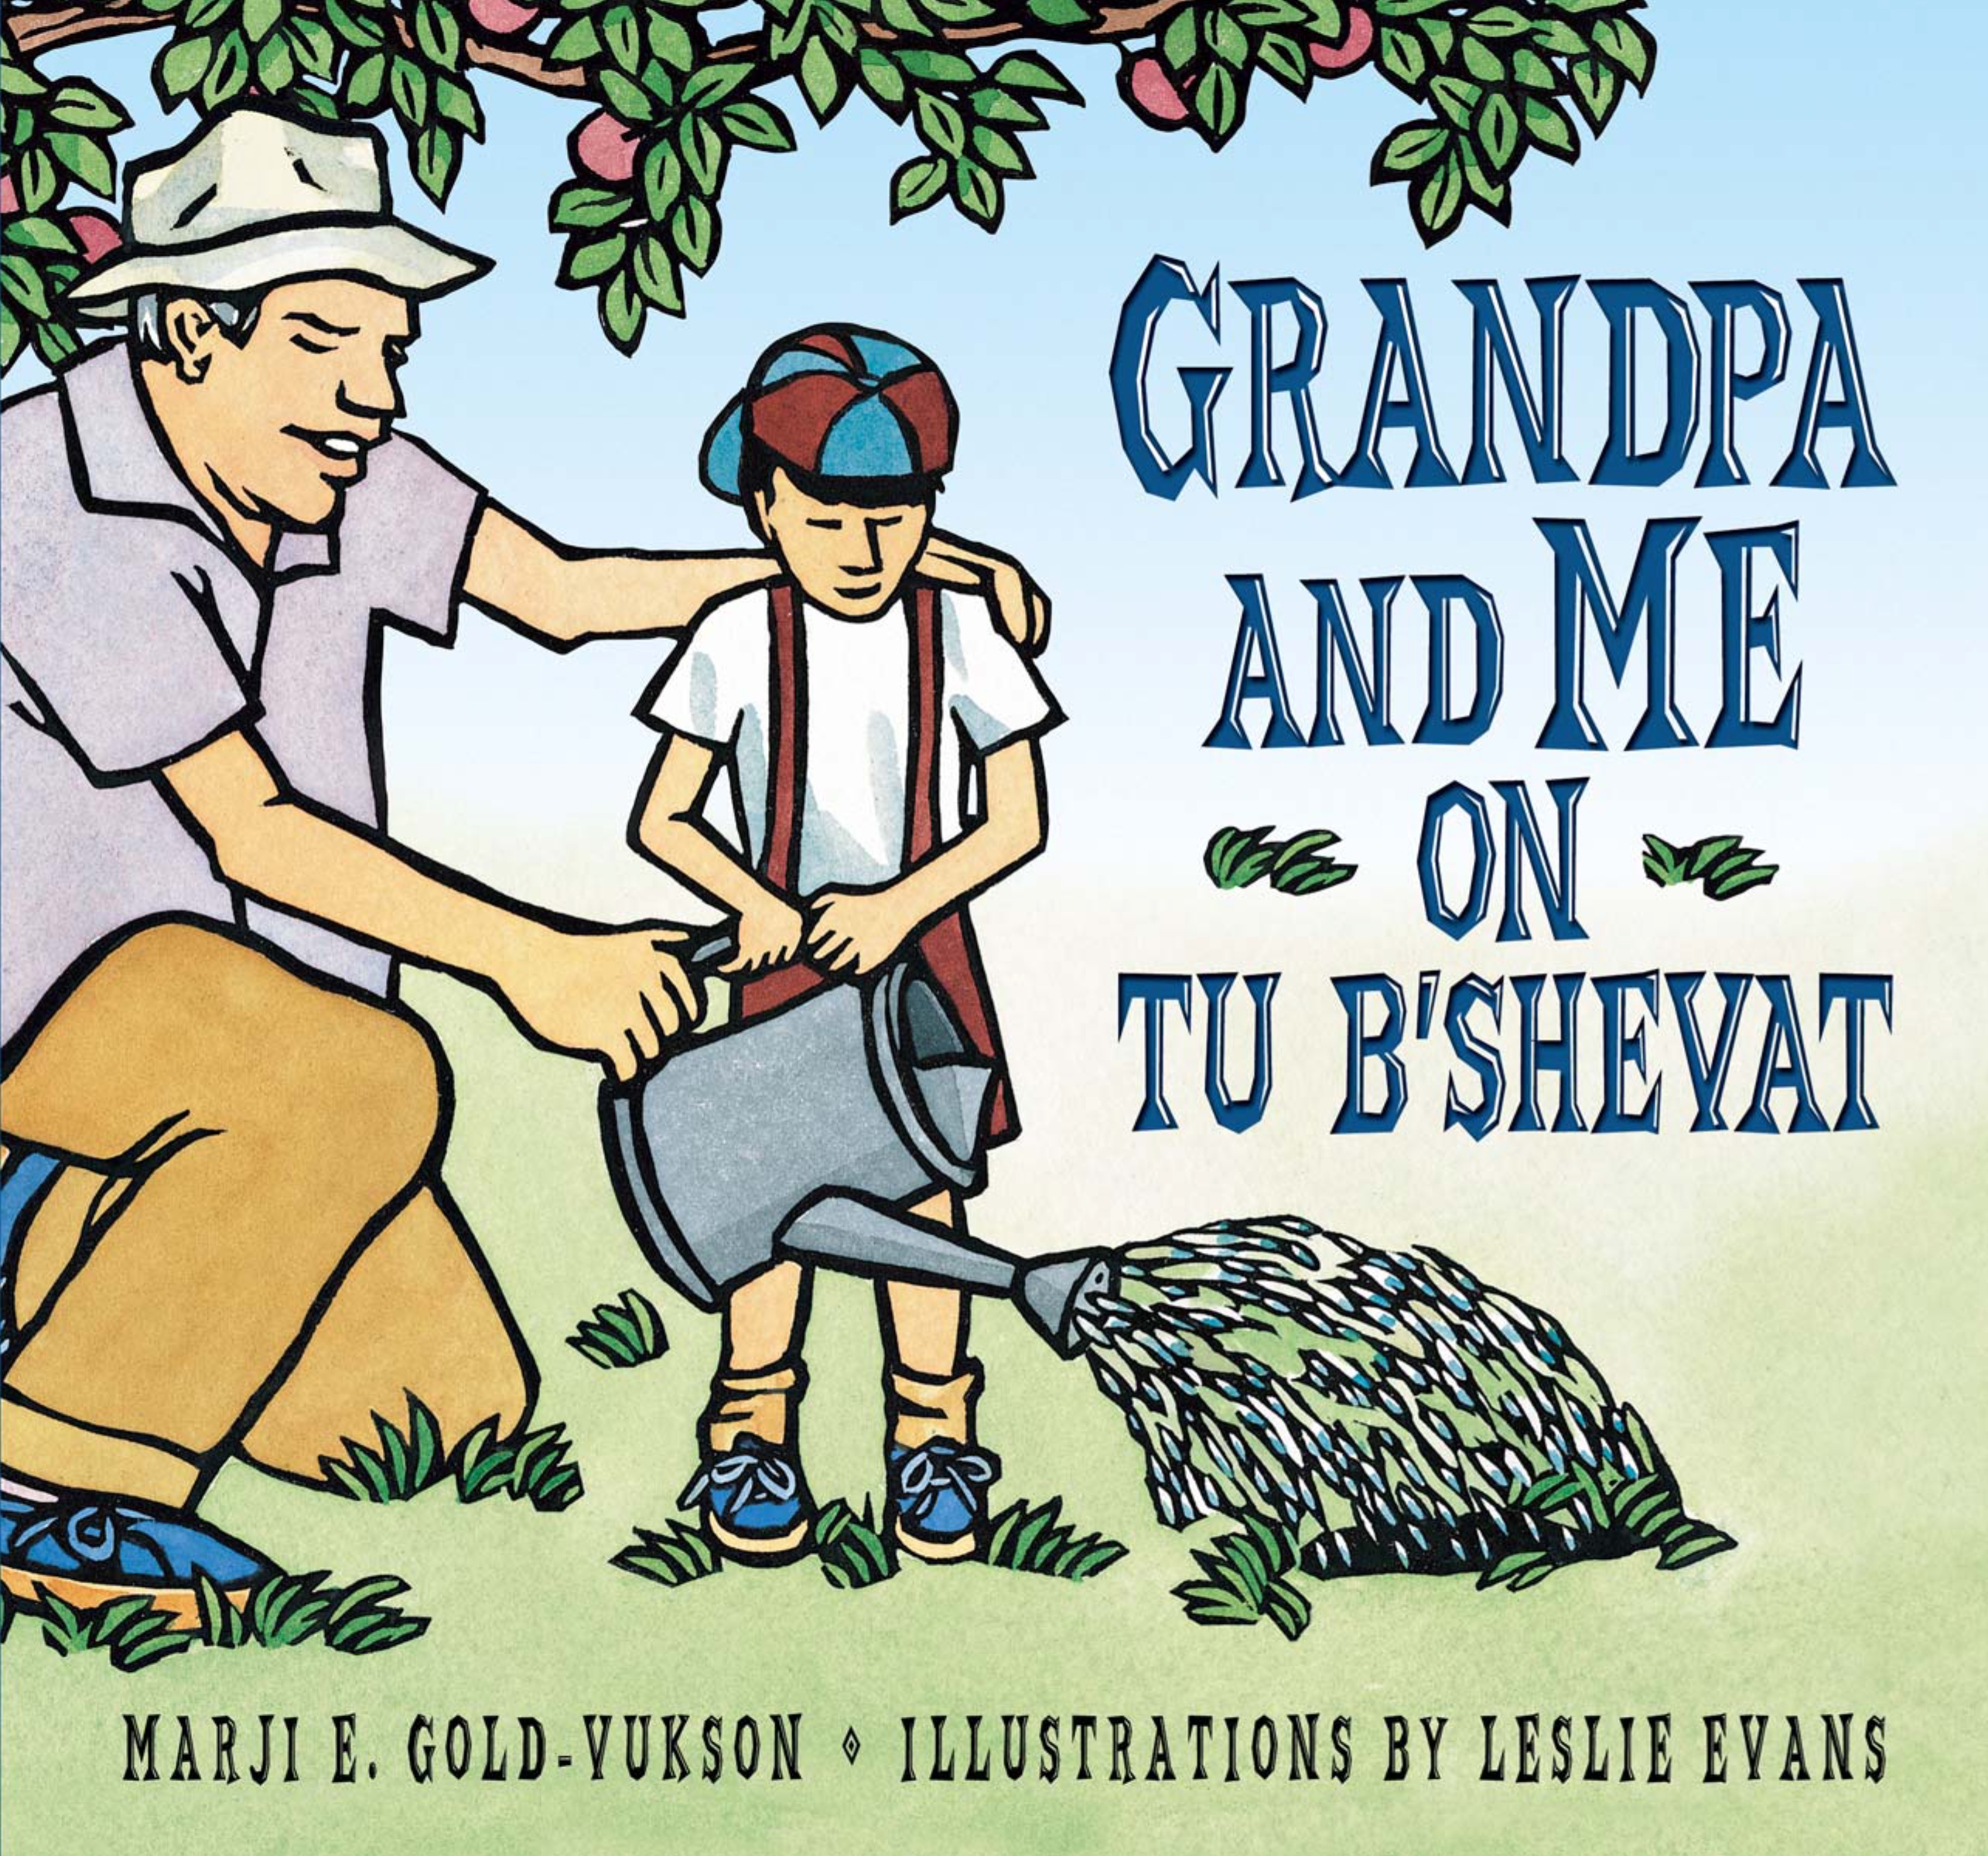 Grandpa and Me on the Tu b’shevat